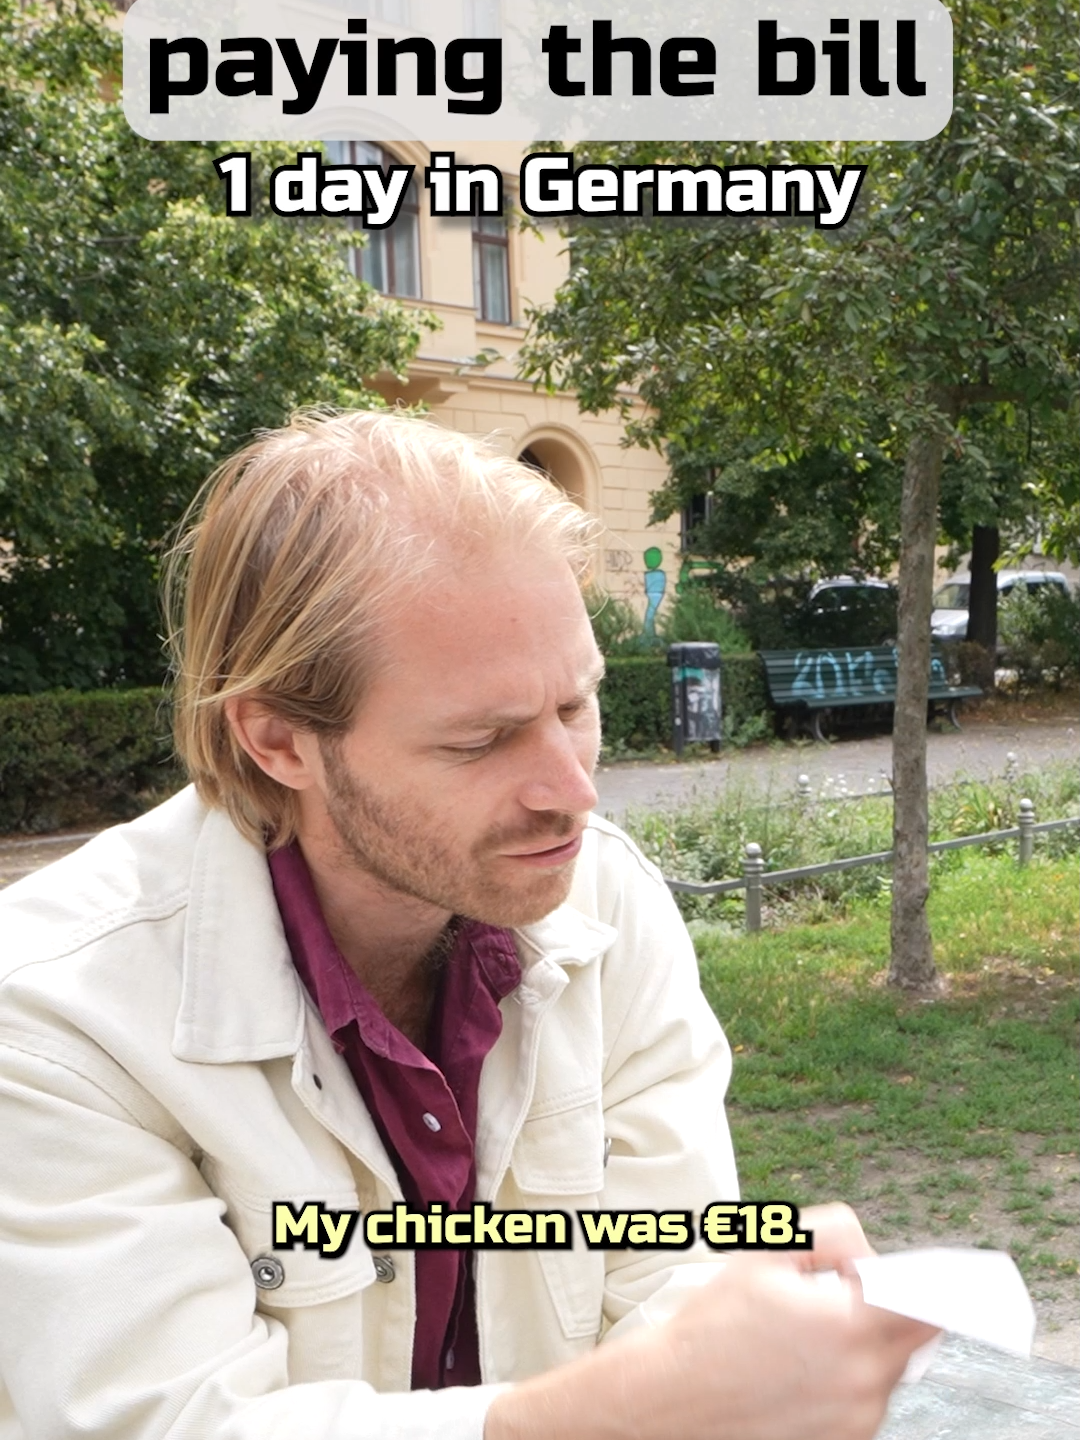 1 day vs 10 years in Germany | The Bill 💸 #germany #restaurant #bill